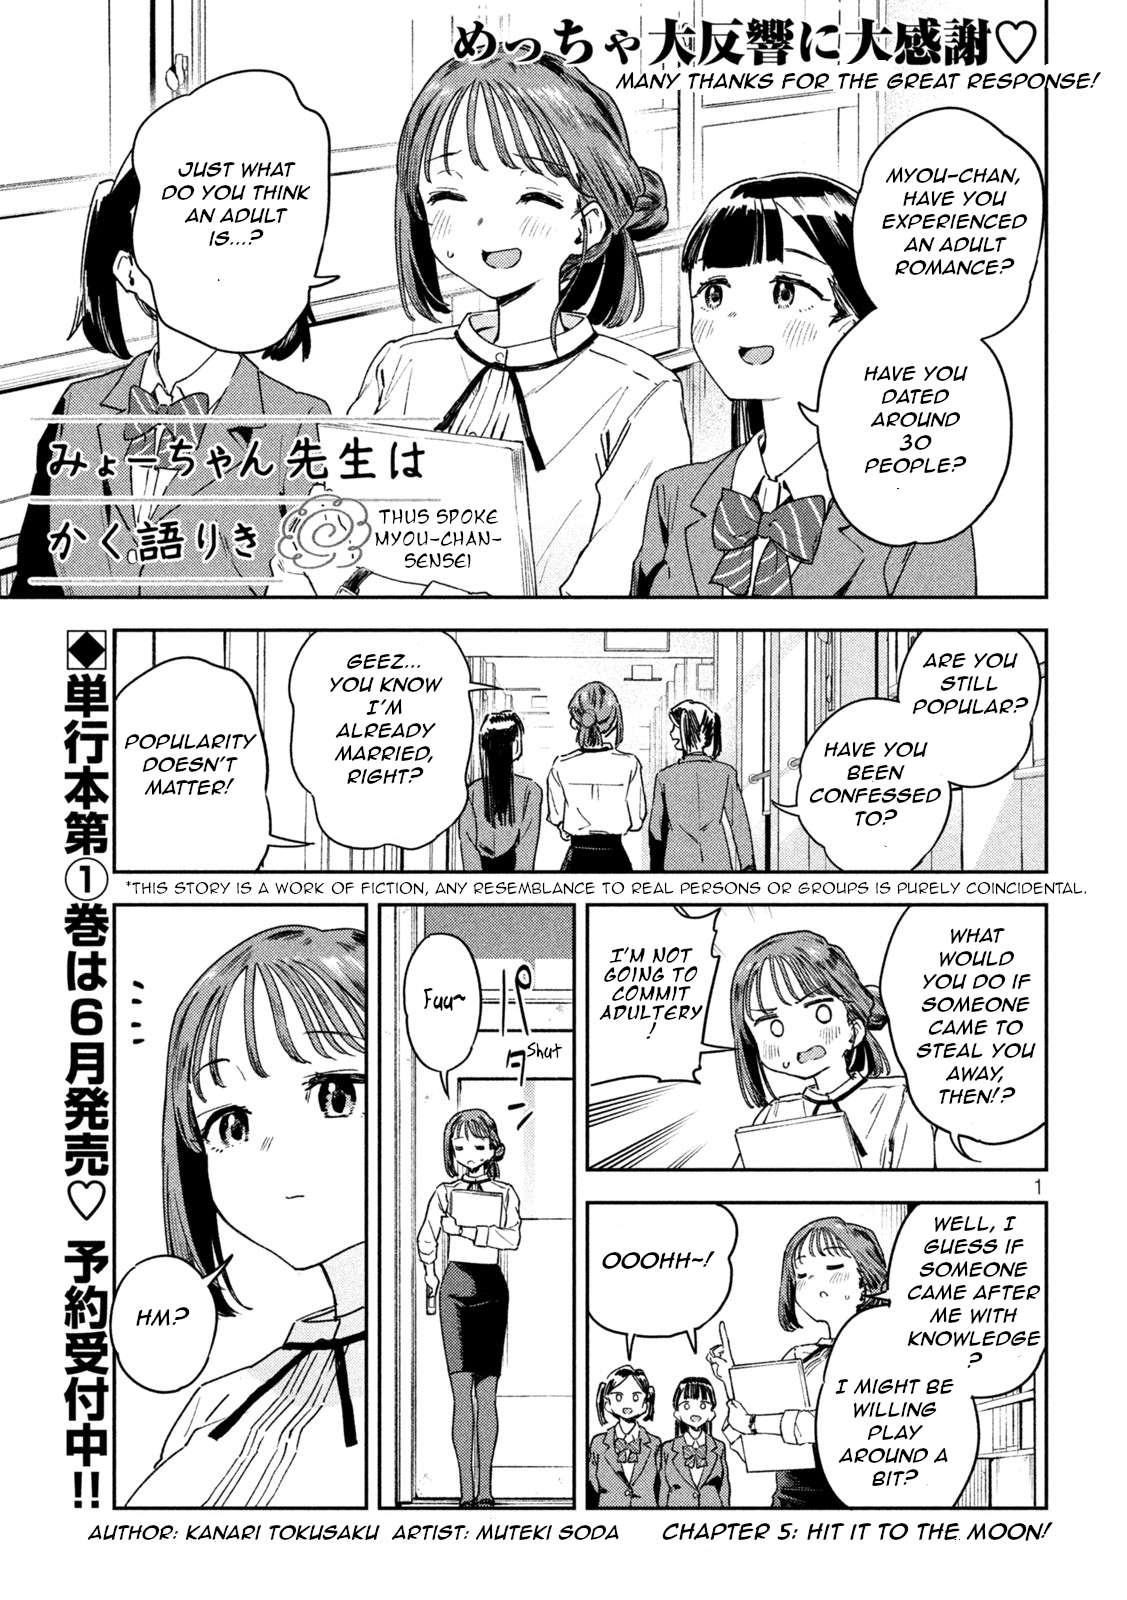 Miyo-Chan Sensei Said So - chapter 5 - #1